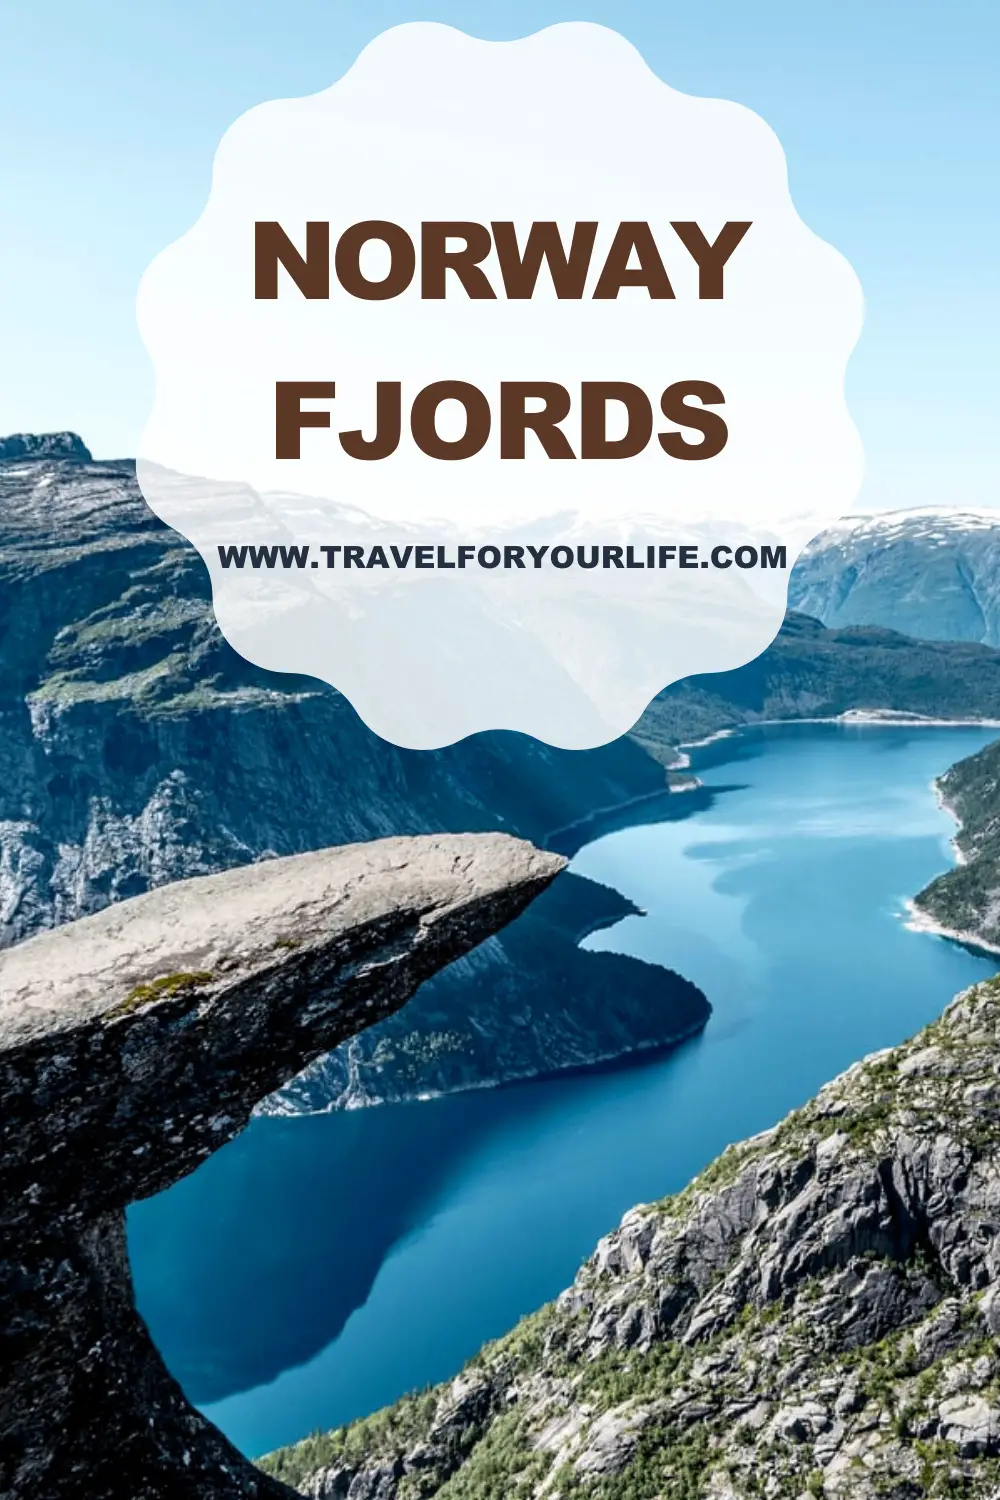 Norway fjords 